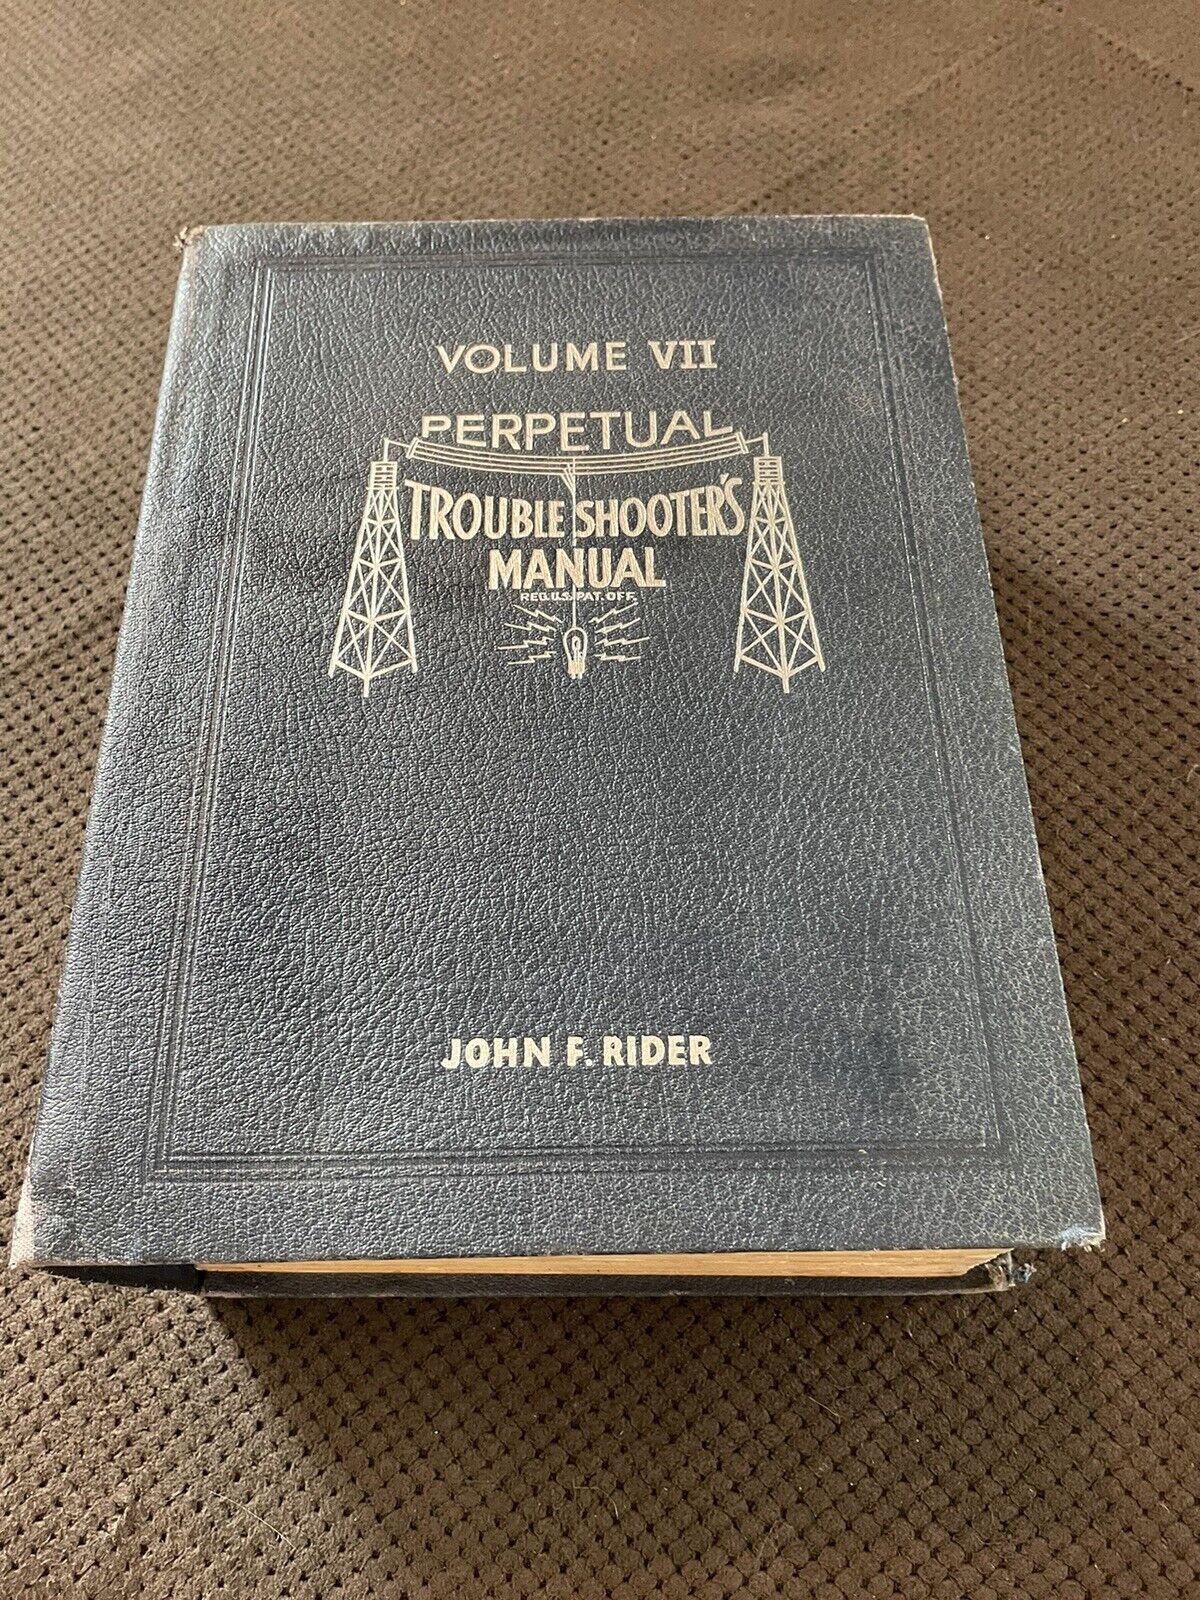 1936 John F Rider Perpetual Trouble Shooters Manual Volume VII RCA Arcturus Tube